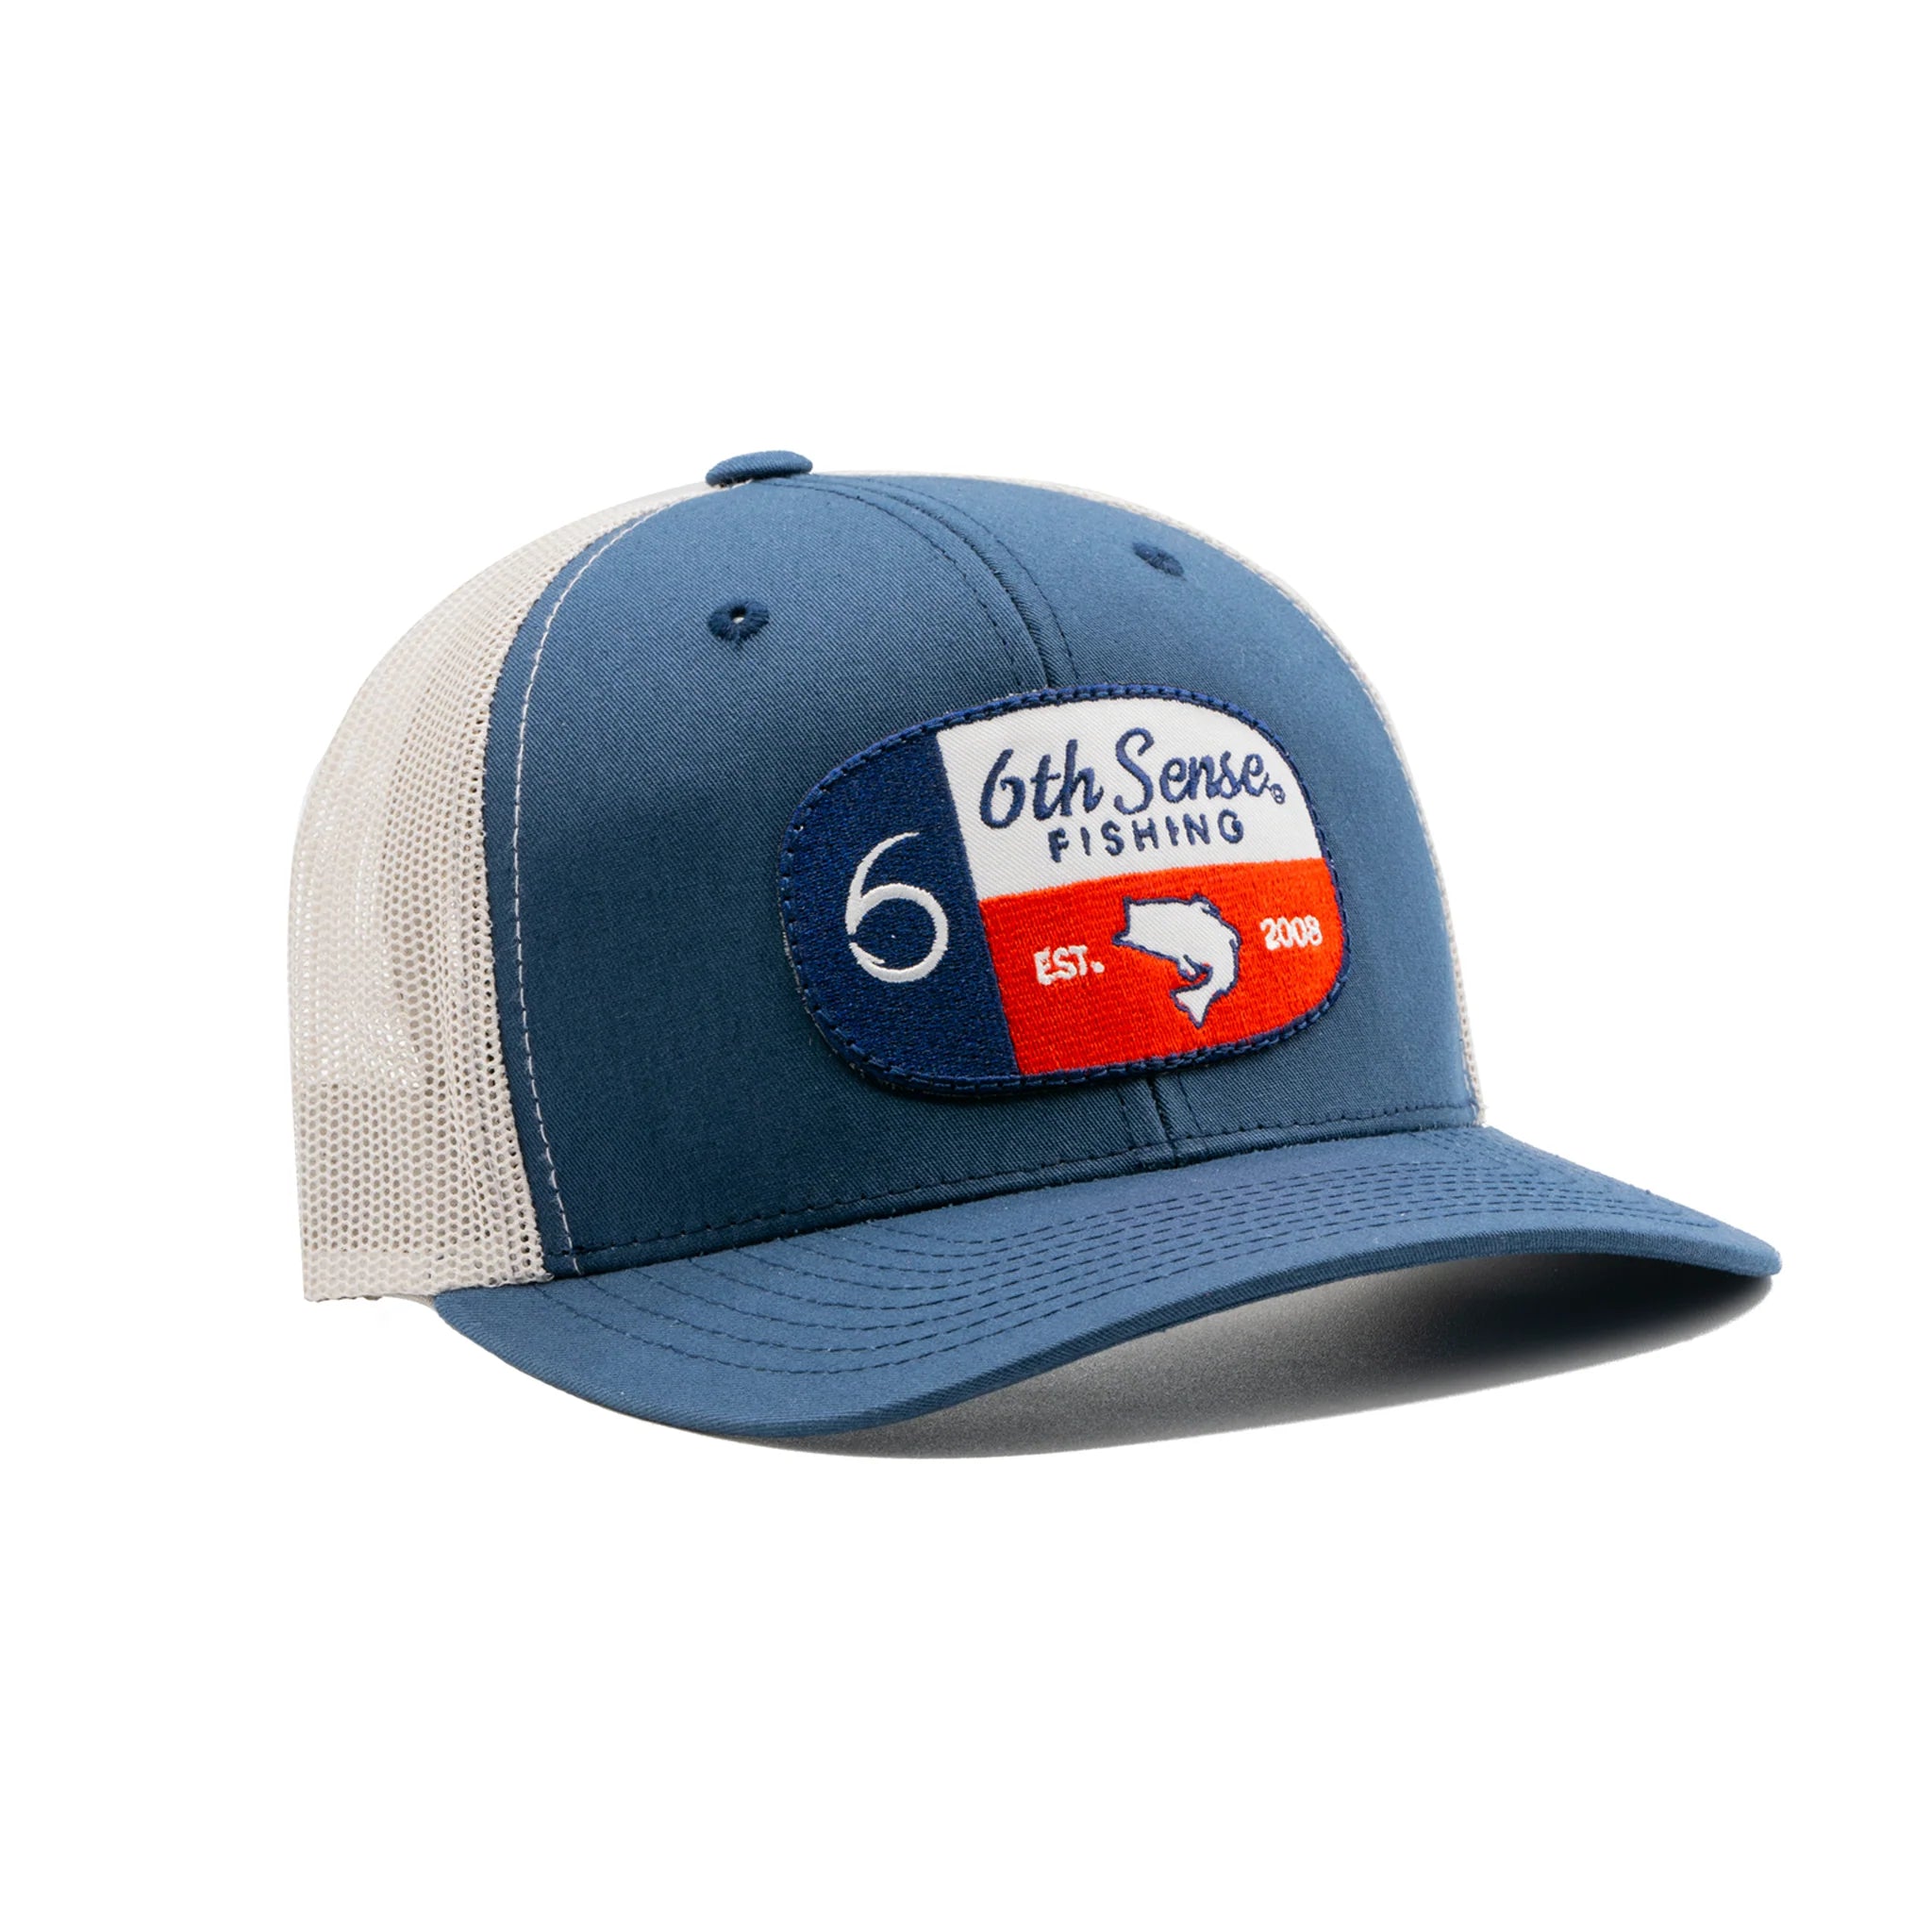 Mossy Oak Blue Inshore Curved Bill White Mesh Trucker Snapback Hat Cap Fishing